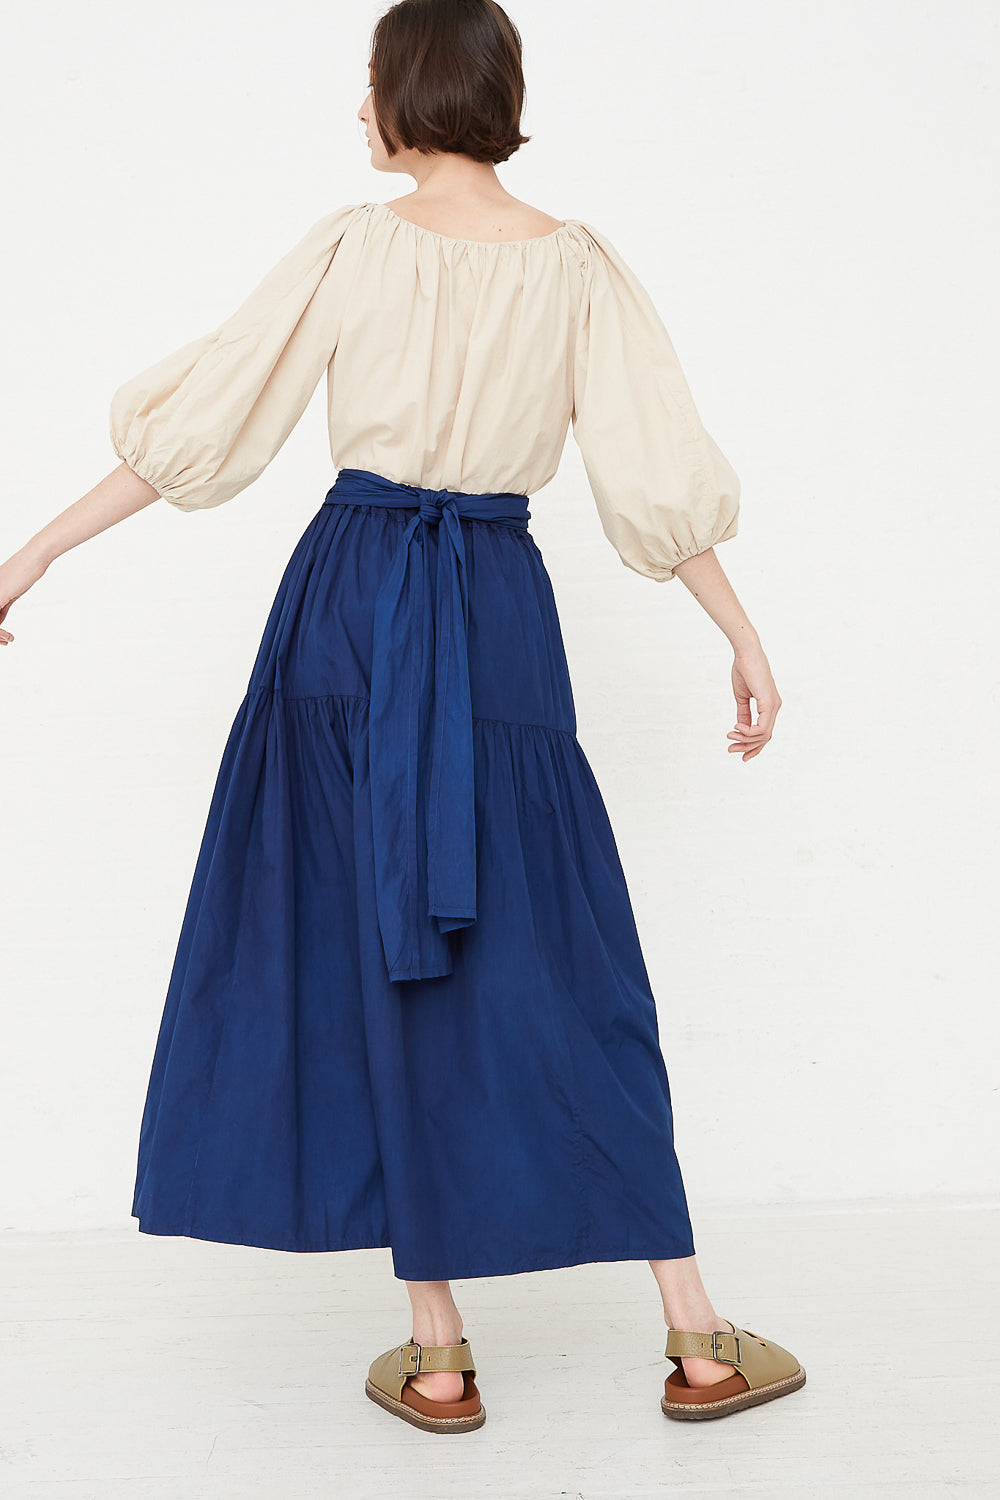 Cosmic Wonder - Suvin Cotton Broadcloth Wrapped Gather Skirt in Ryukyu Indigo back view